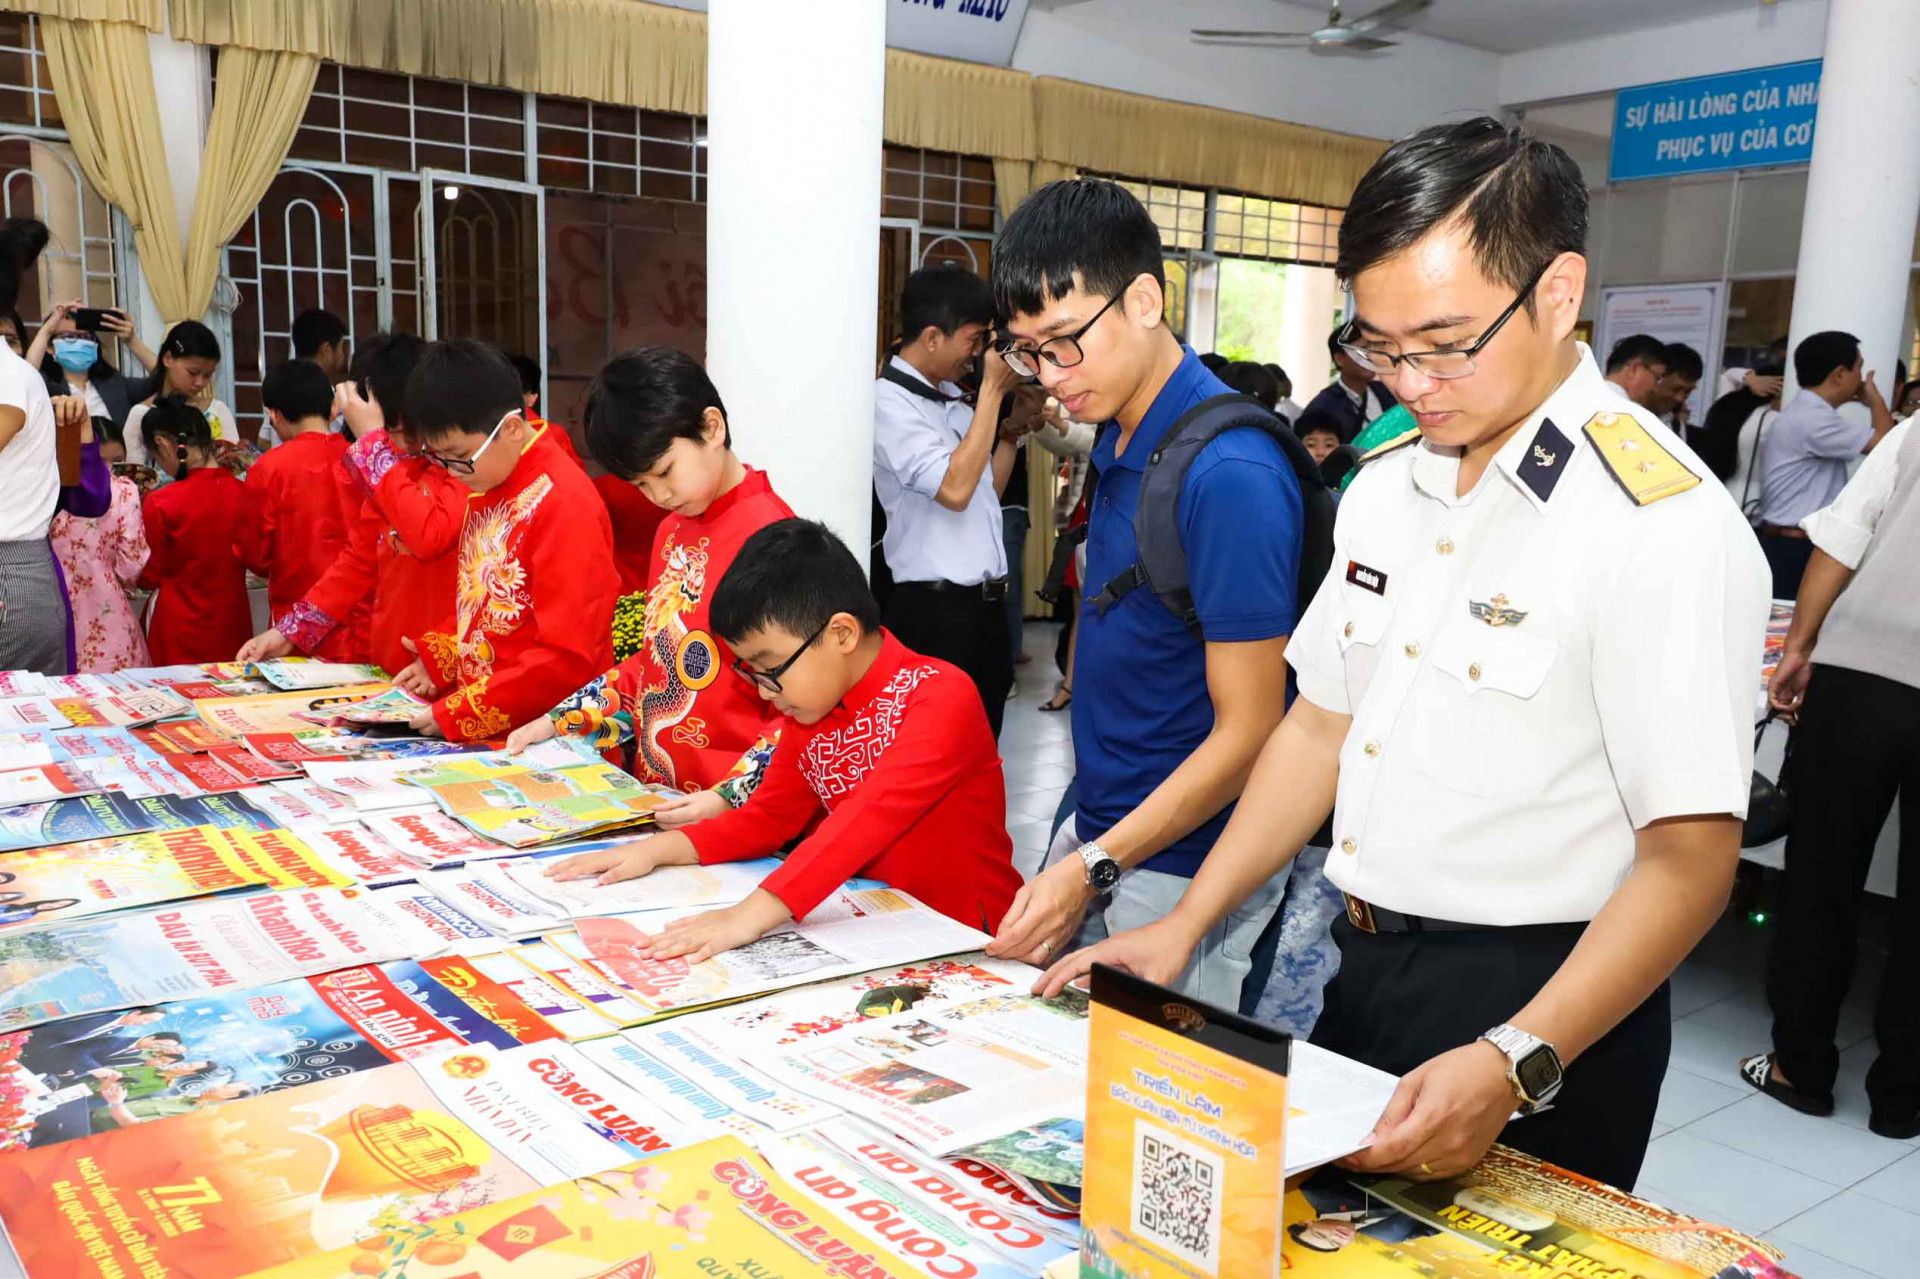 A navy soldier visit Khanh Hoa’s 2023 Spring Newspaper Festival